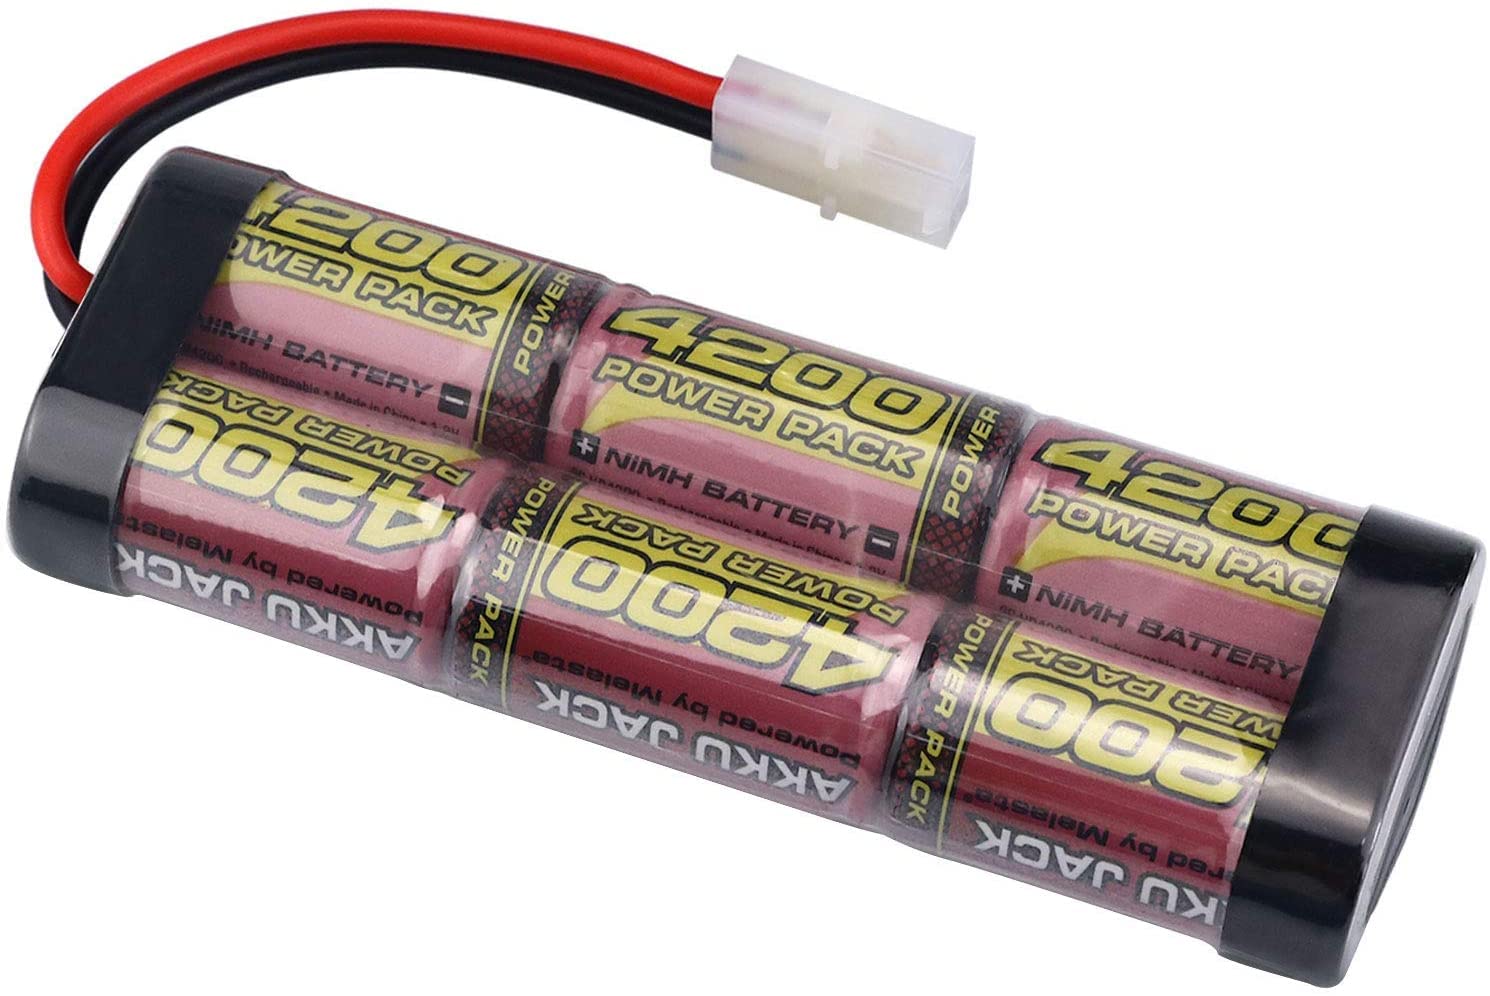 melasta 7,2V 4200mAh NiMH Akku Hochleistungs RC Akkupack Batterie für RC Racing Cars kompatible mit Tamiya Stecker, verlängerte Lebensdauer mit geringer Selbstentladung